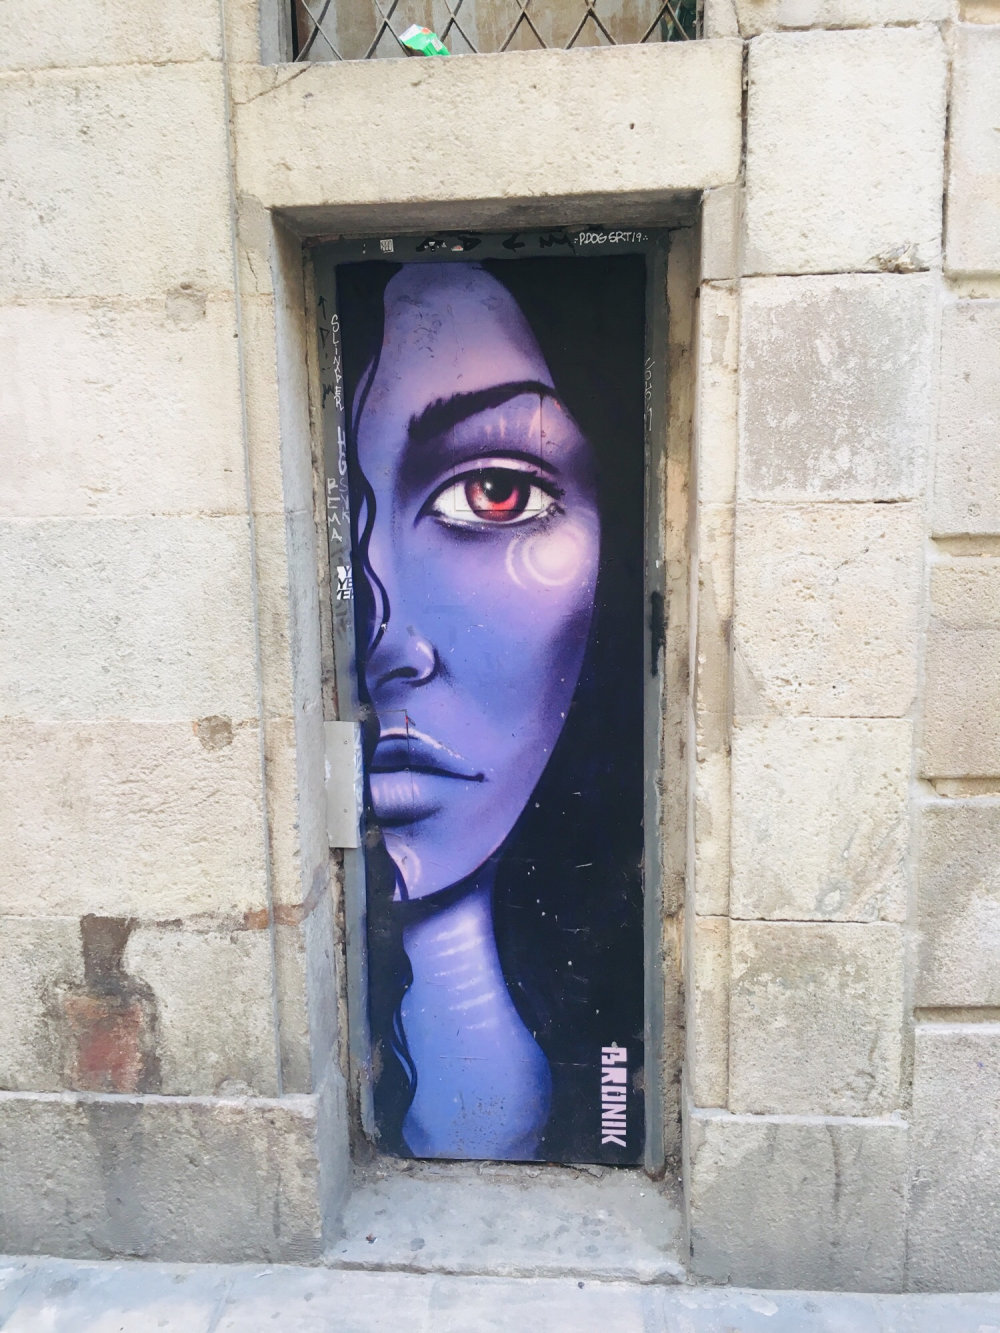 mural in Barcelona by artist BRONIK.